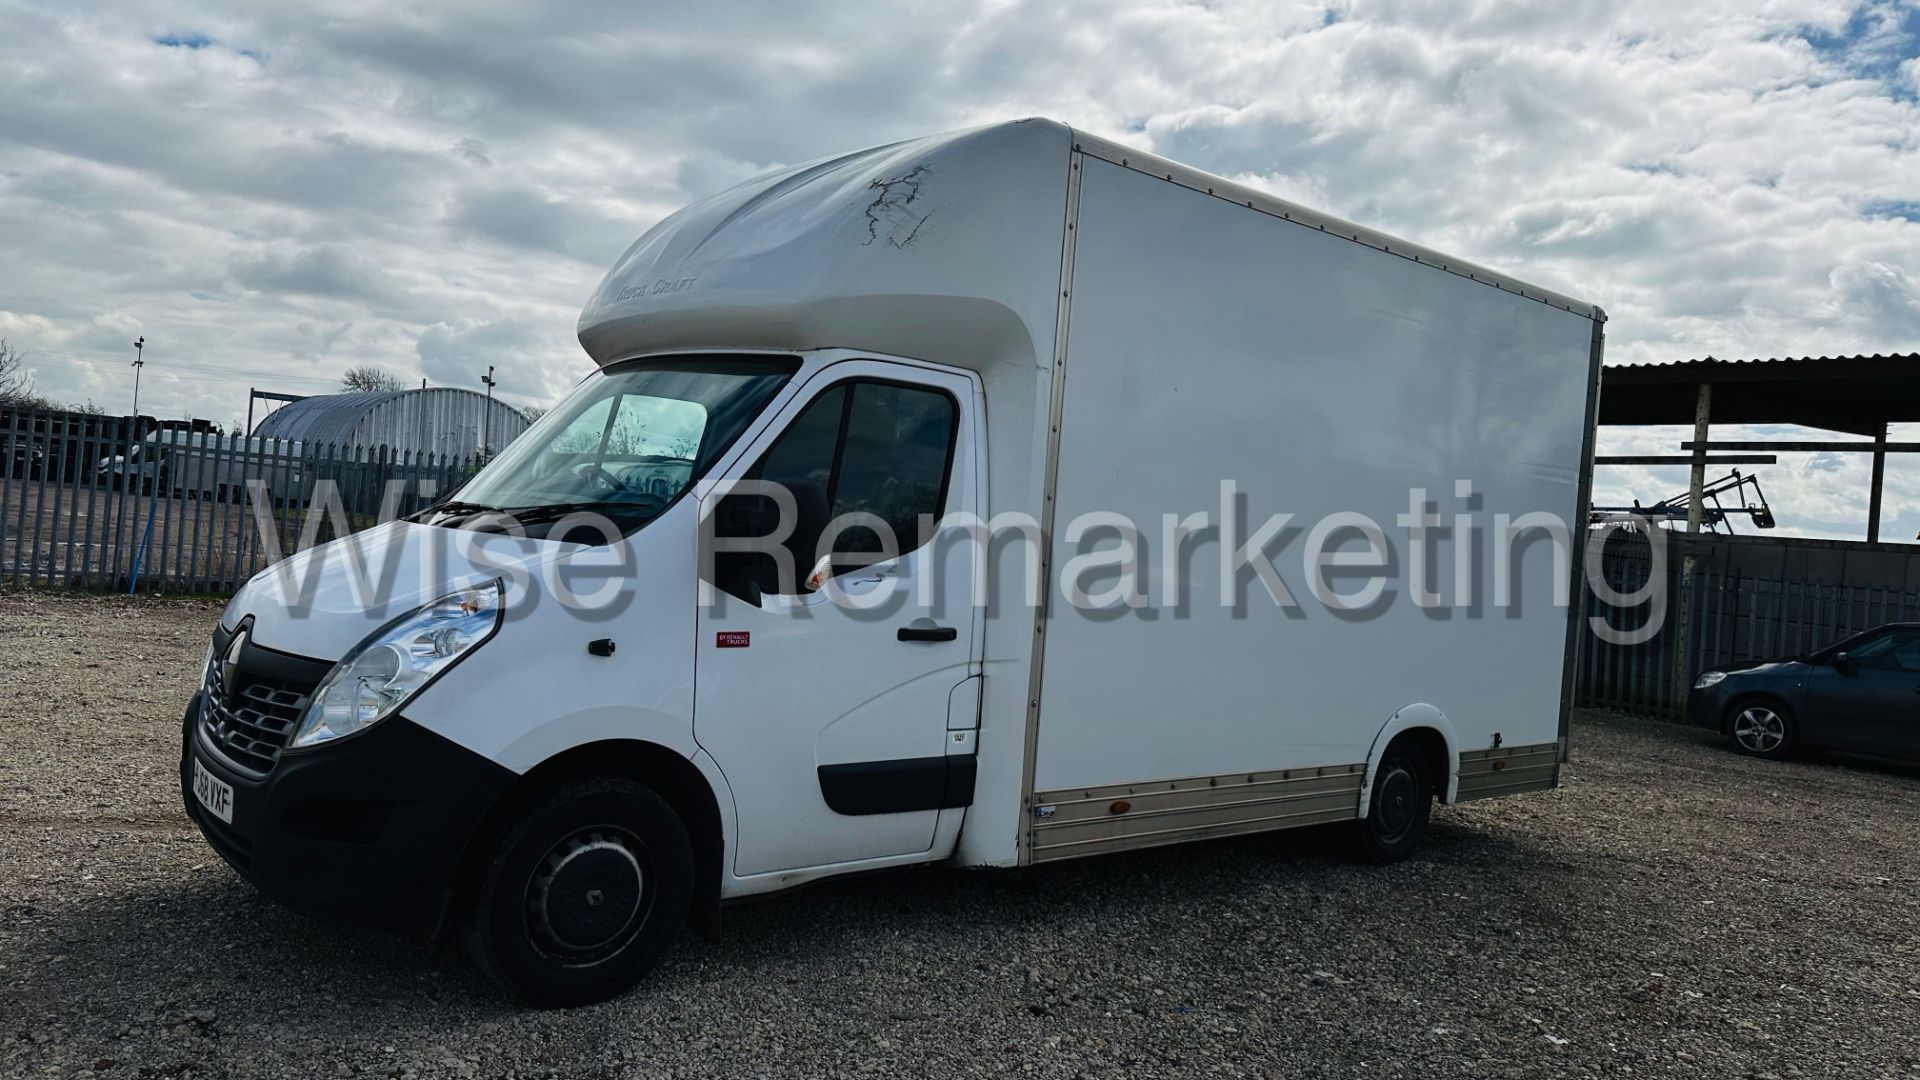 (RESERVE MET)Renault Master LL35 *LWB - LowLoader / Luton Box Van (2019) 6 Speed *Air Con* (Euro 6) - Image 3 of 30